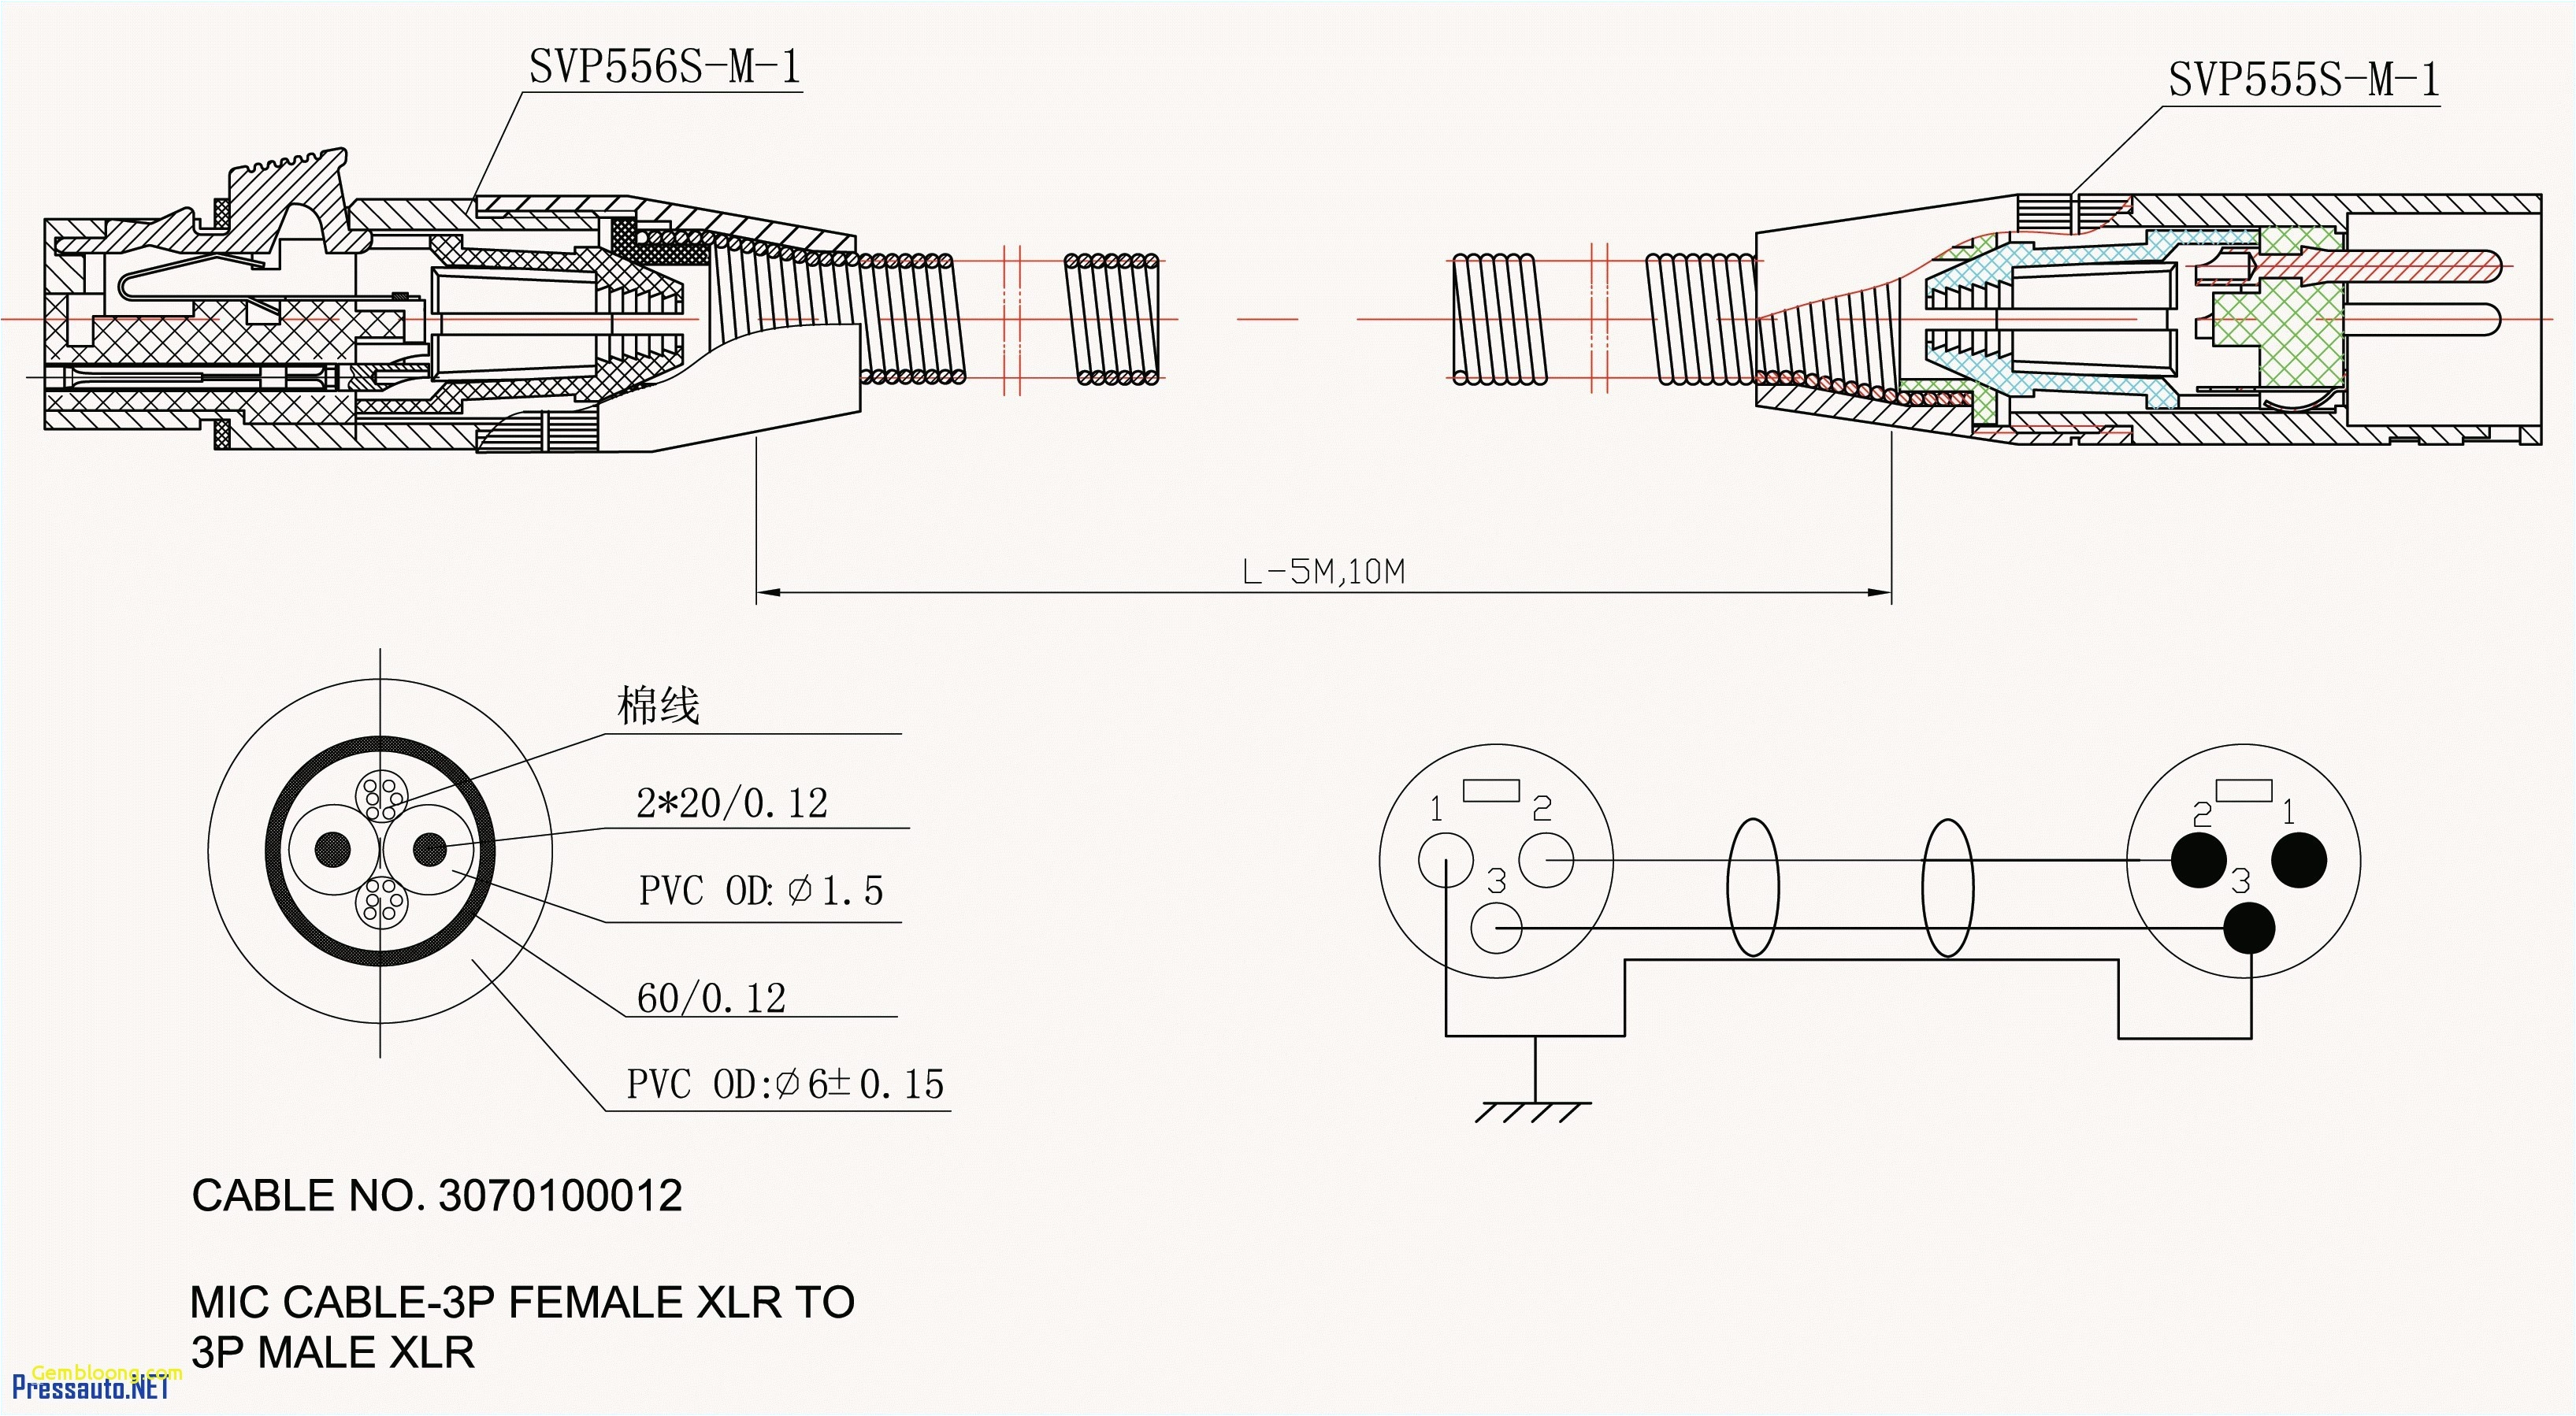 m3 wiring diagram microphone wiring diagram worldm3 wiring diagram microphone wiring diagram inside m3 wiring diagram